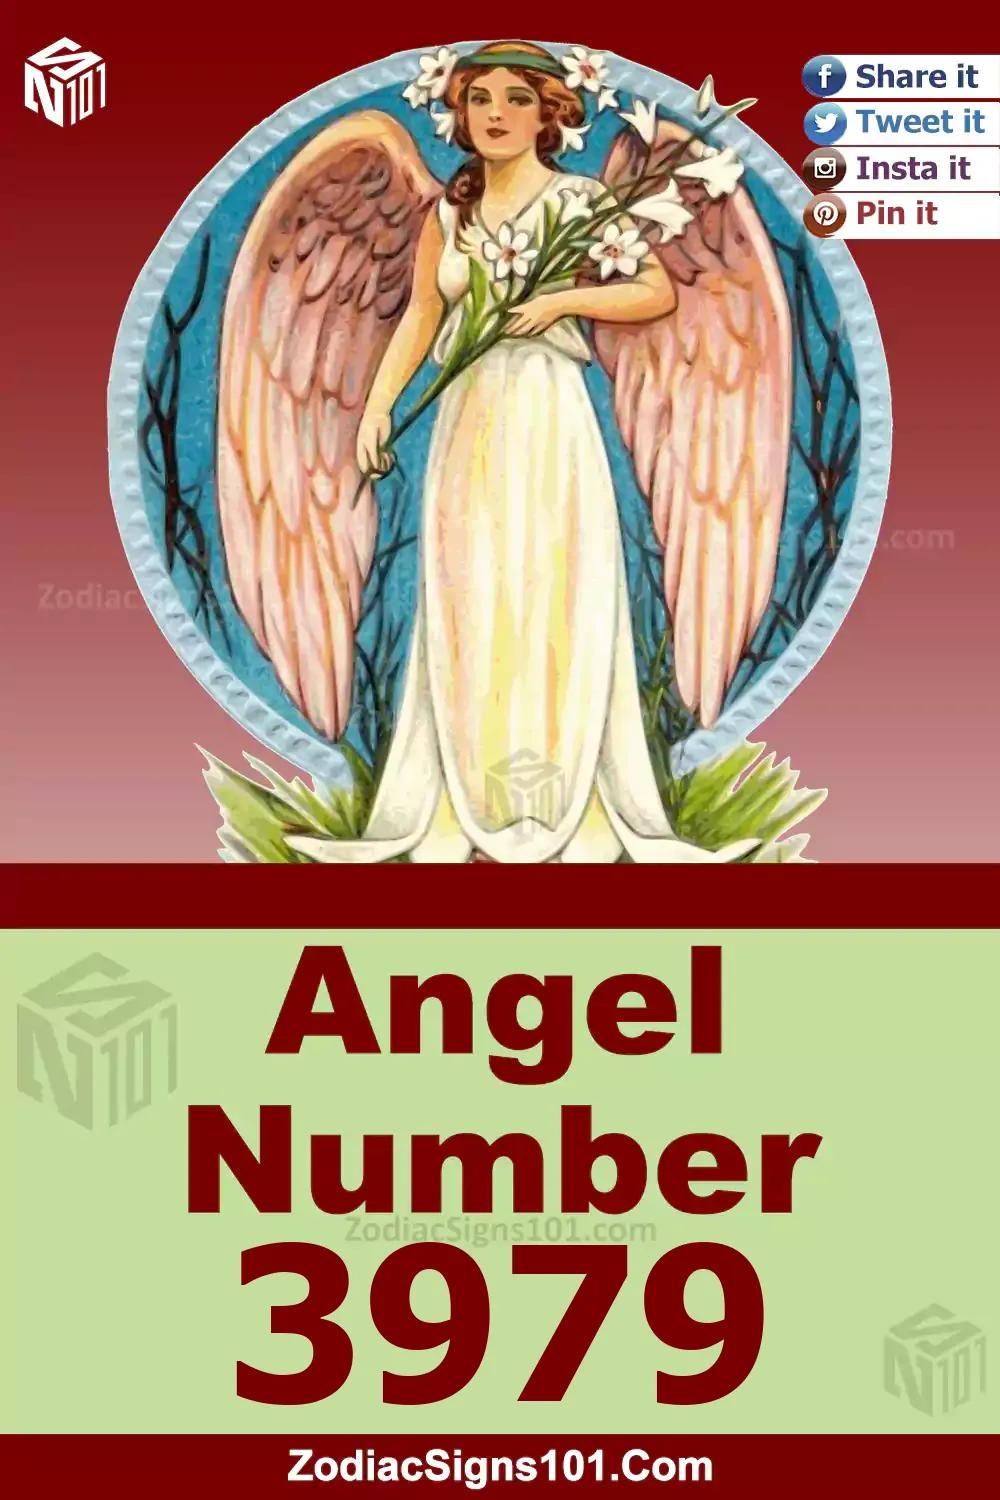 3979-Angel-Number-Meaning.jpg